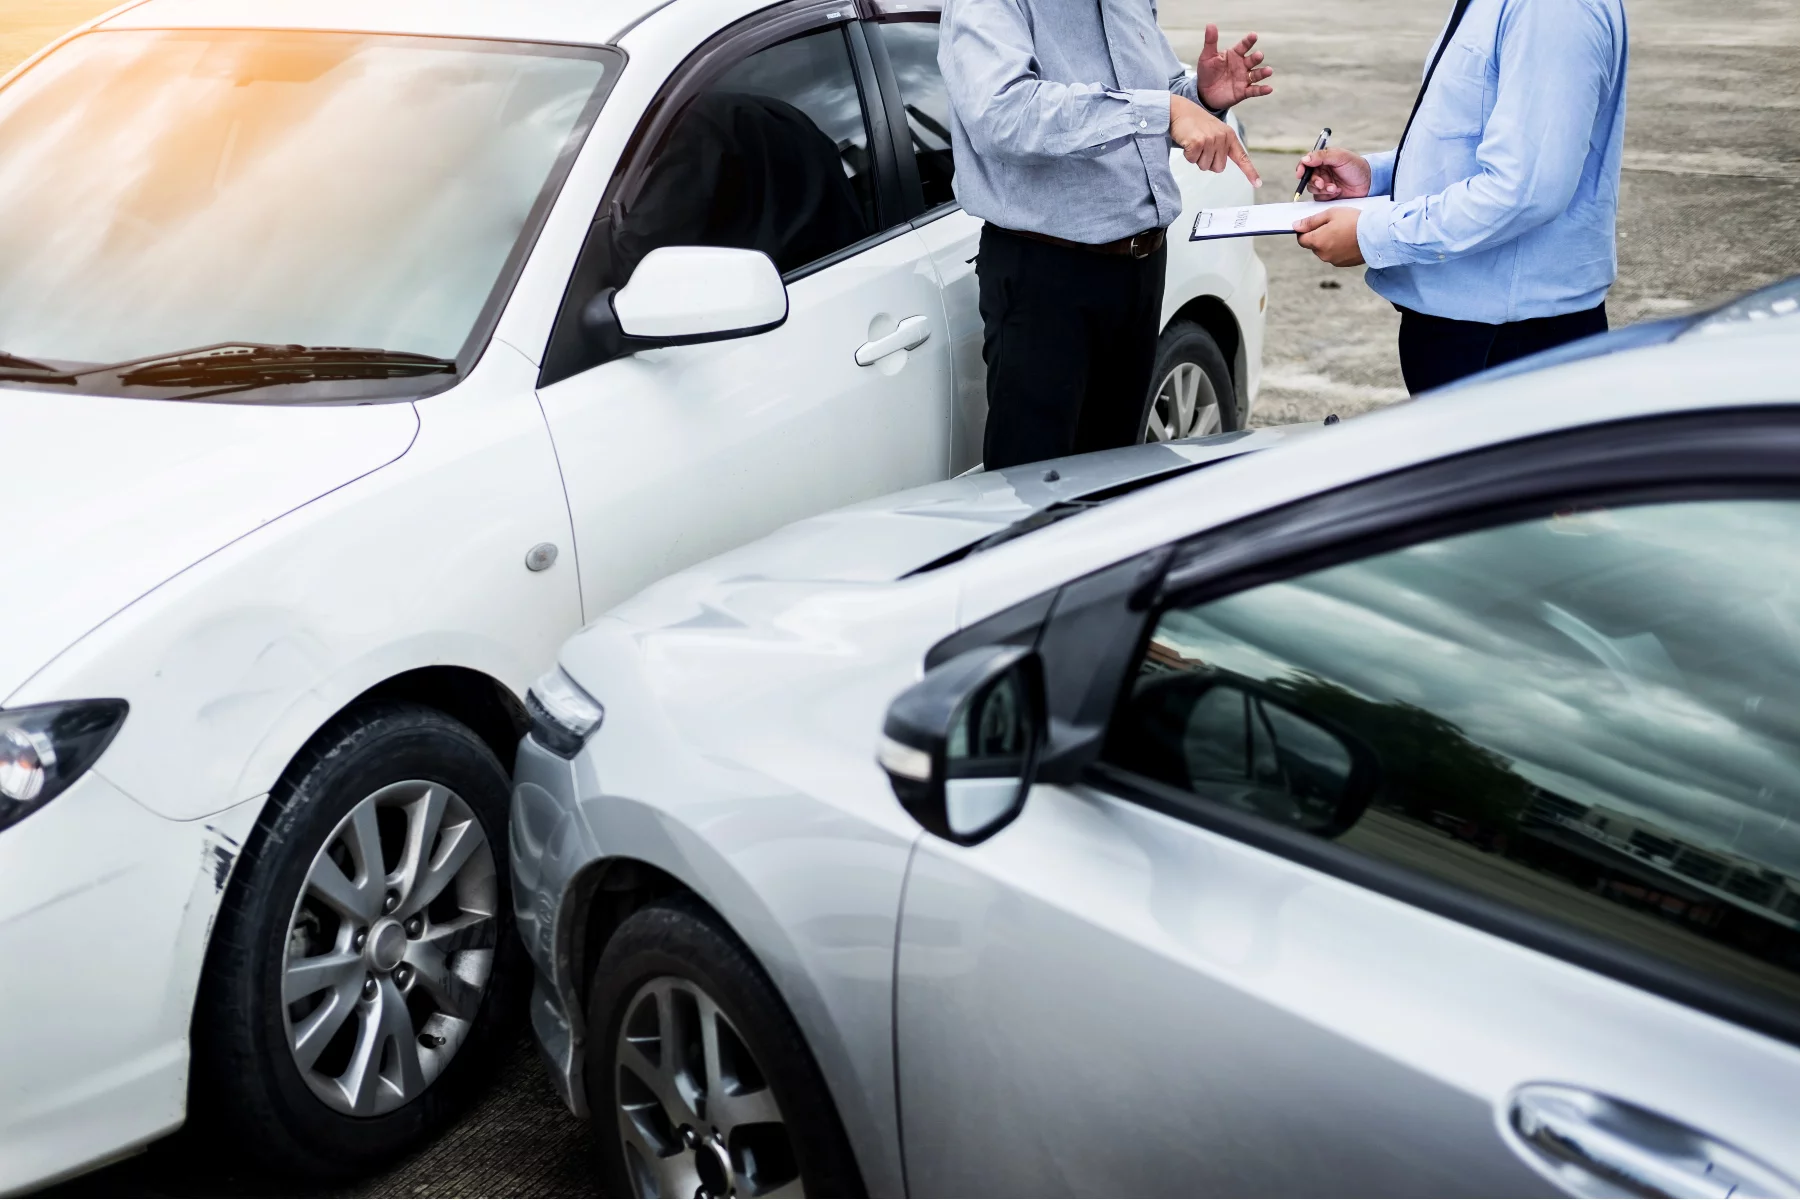 Drivers exchanging insurance details after a car crash